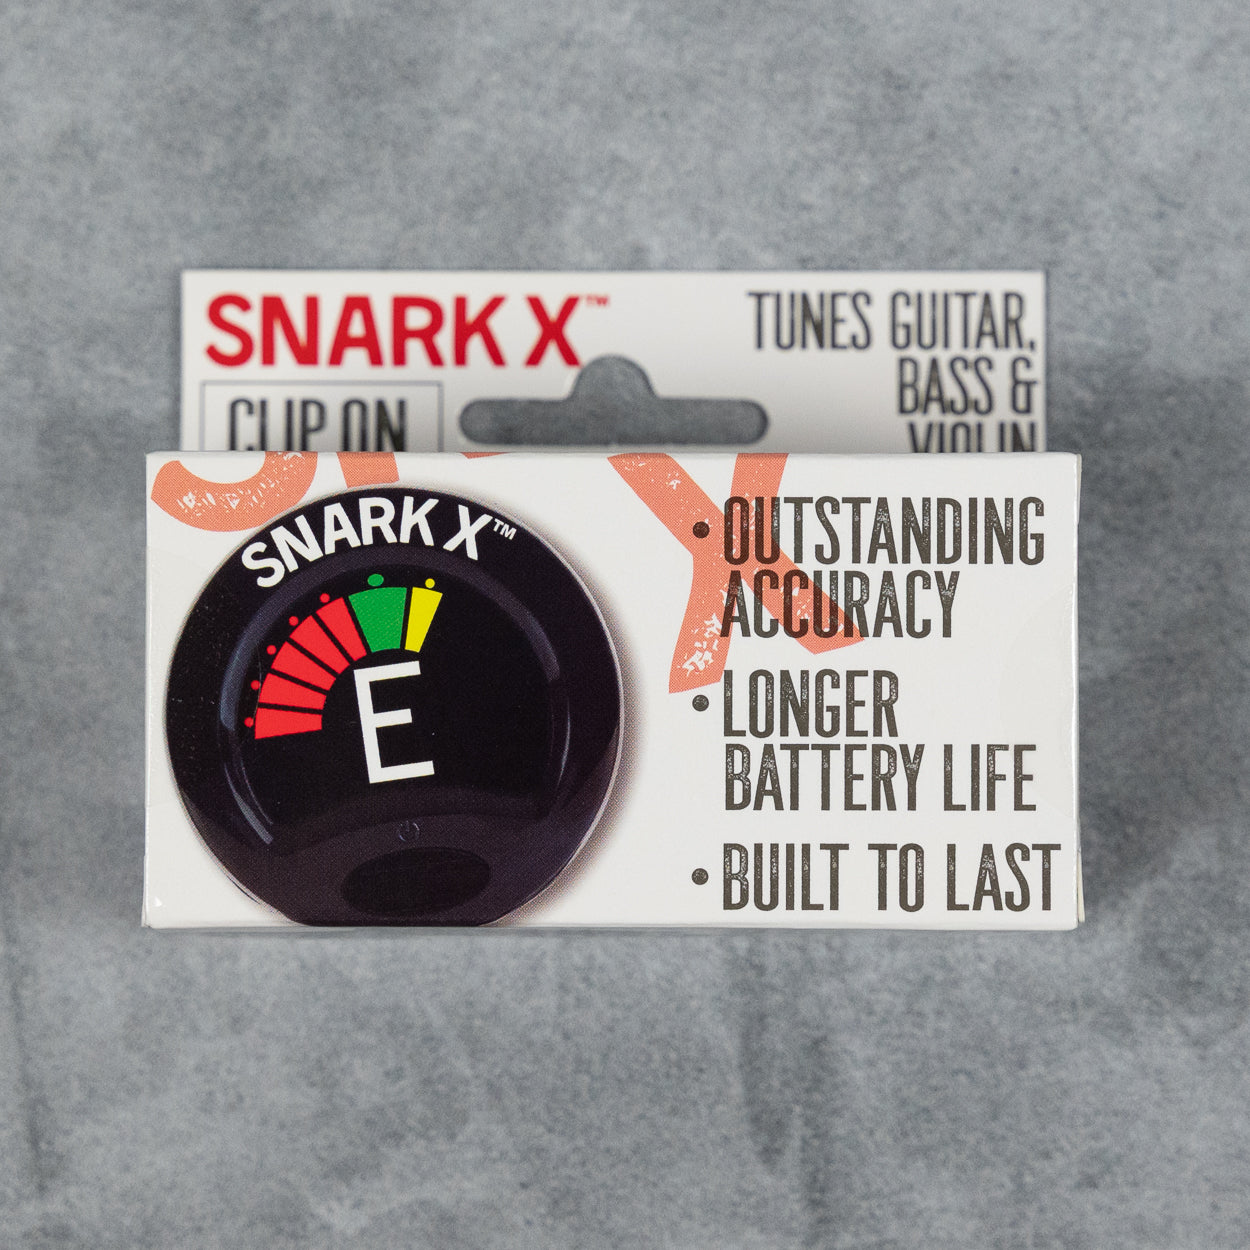 Snark SN-X Clip-On Tuner